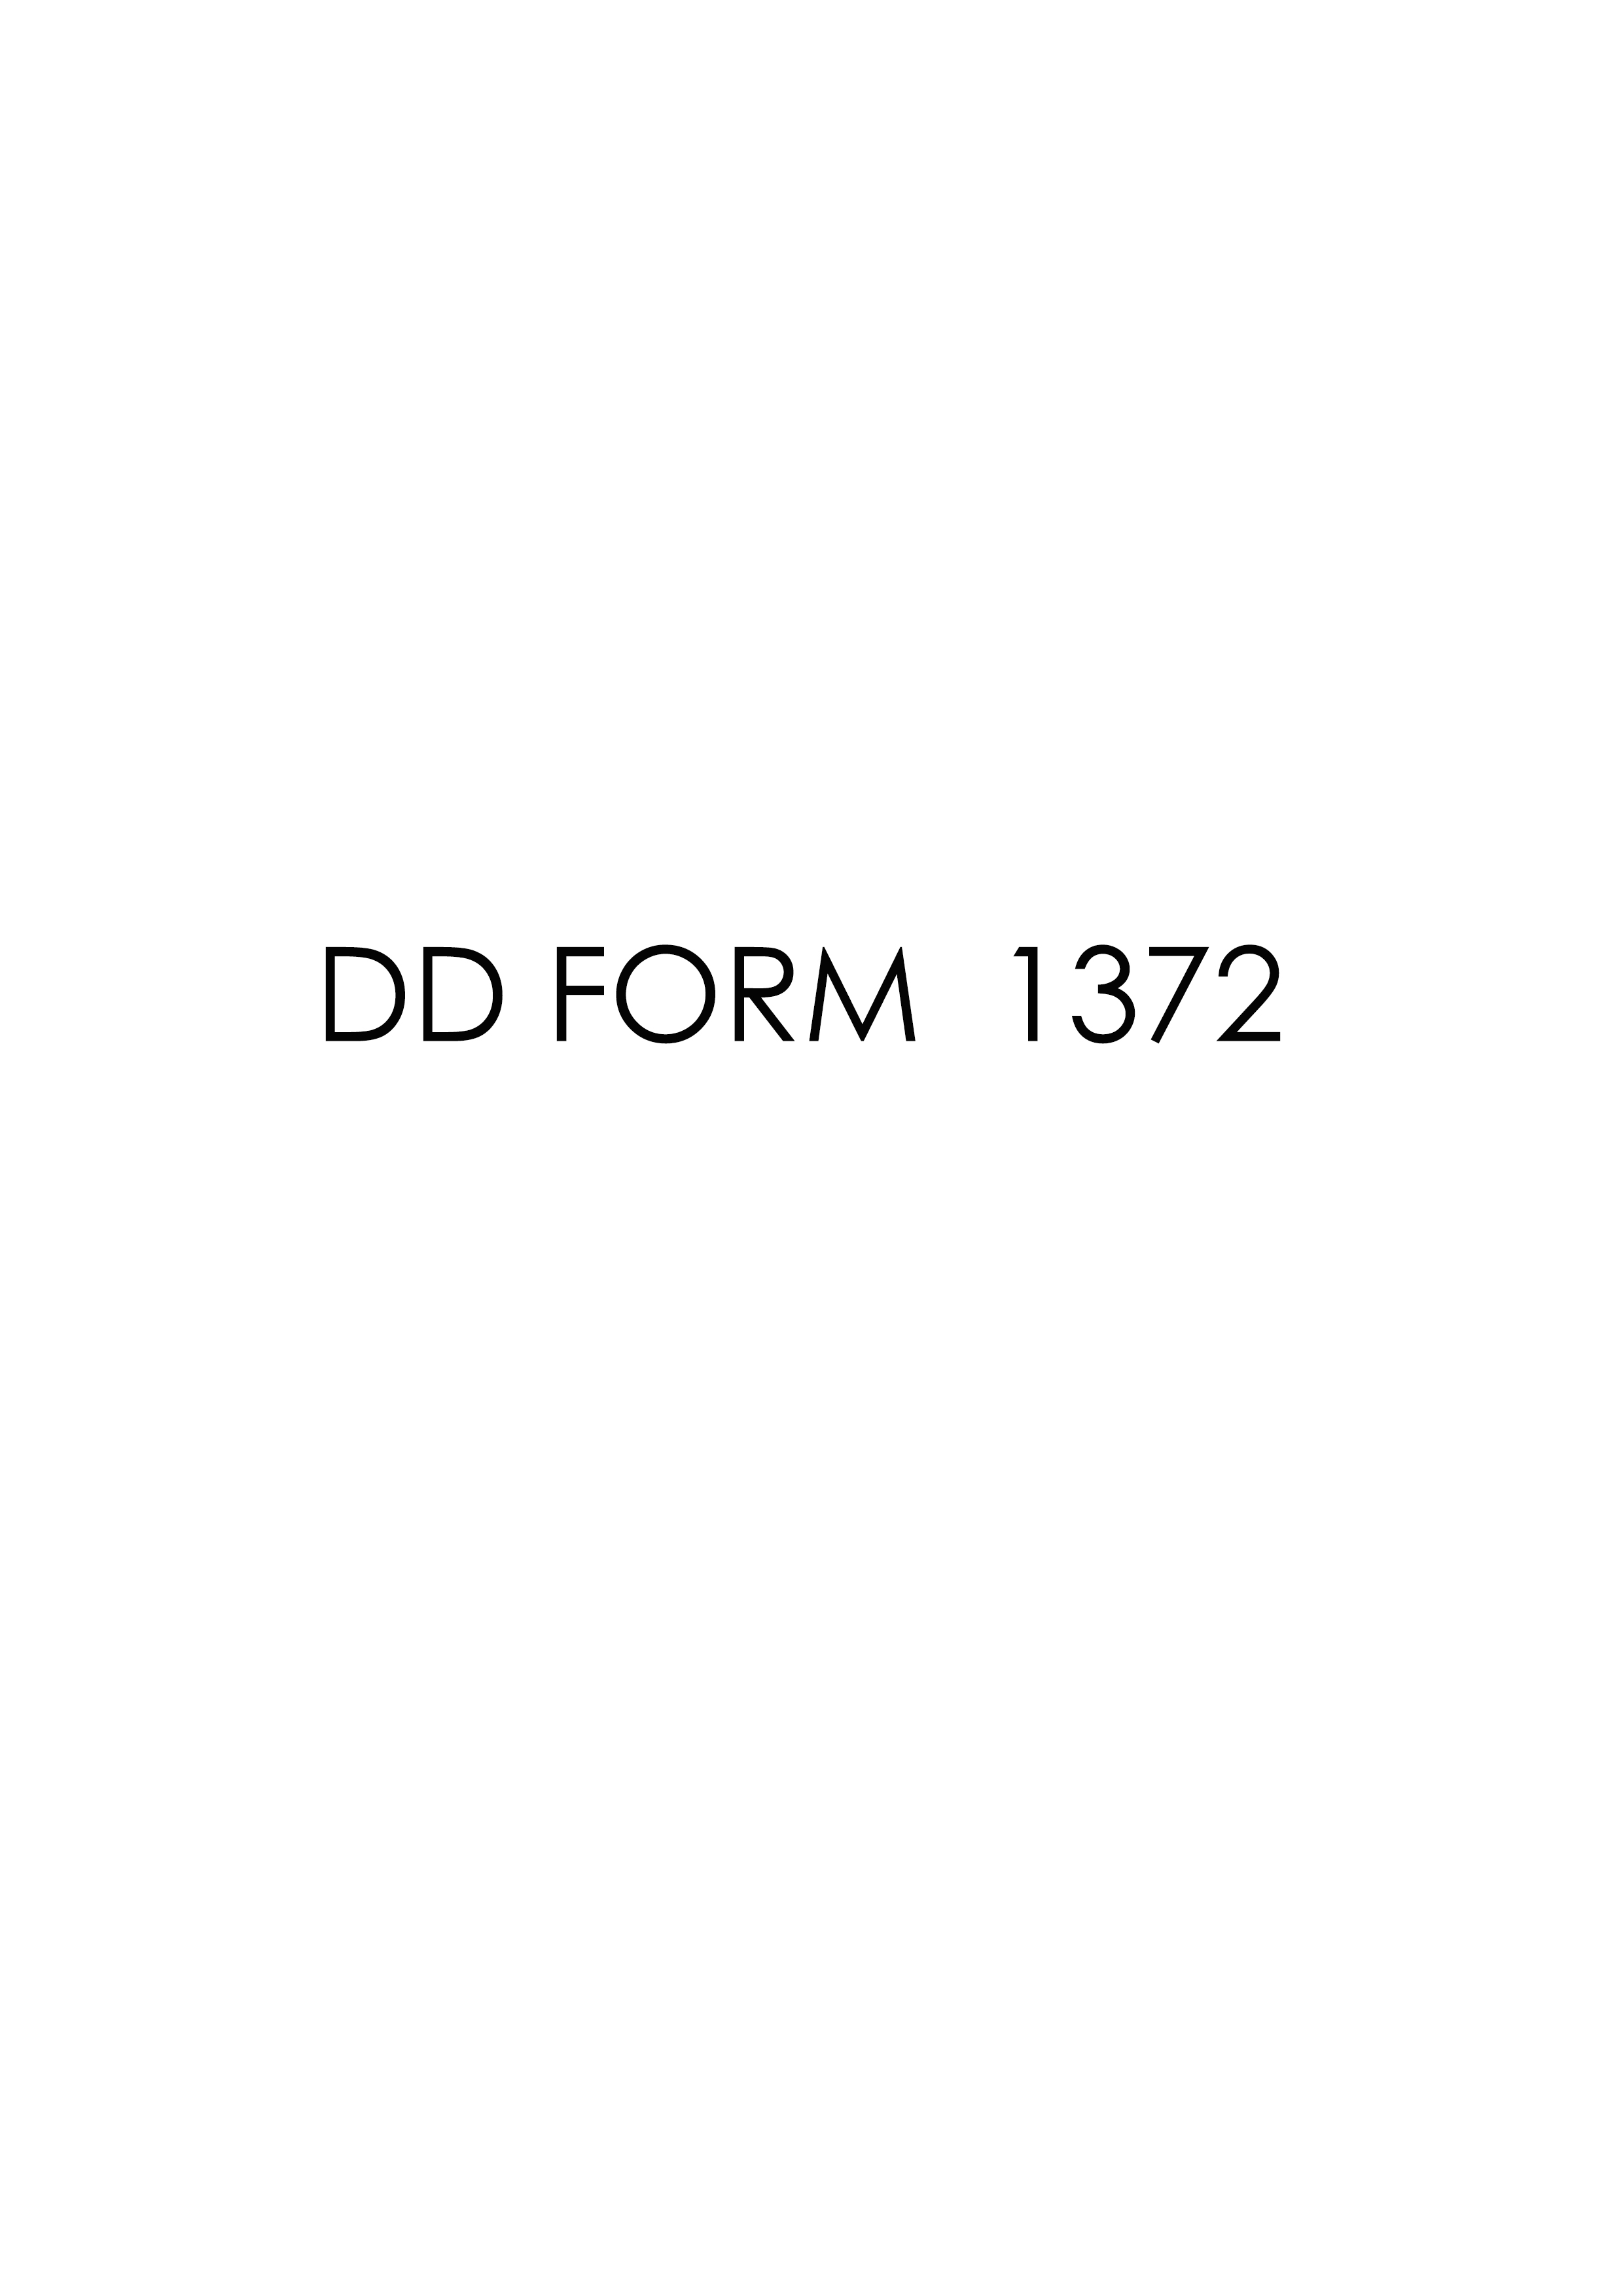 Download dd 1372 Form